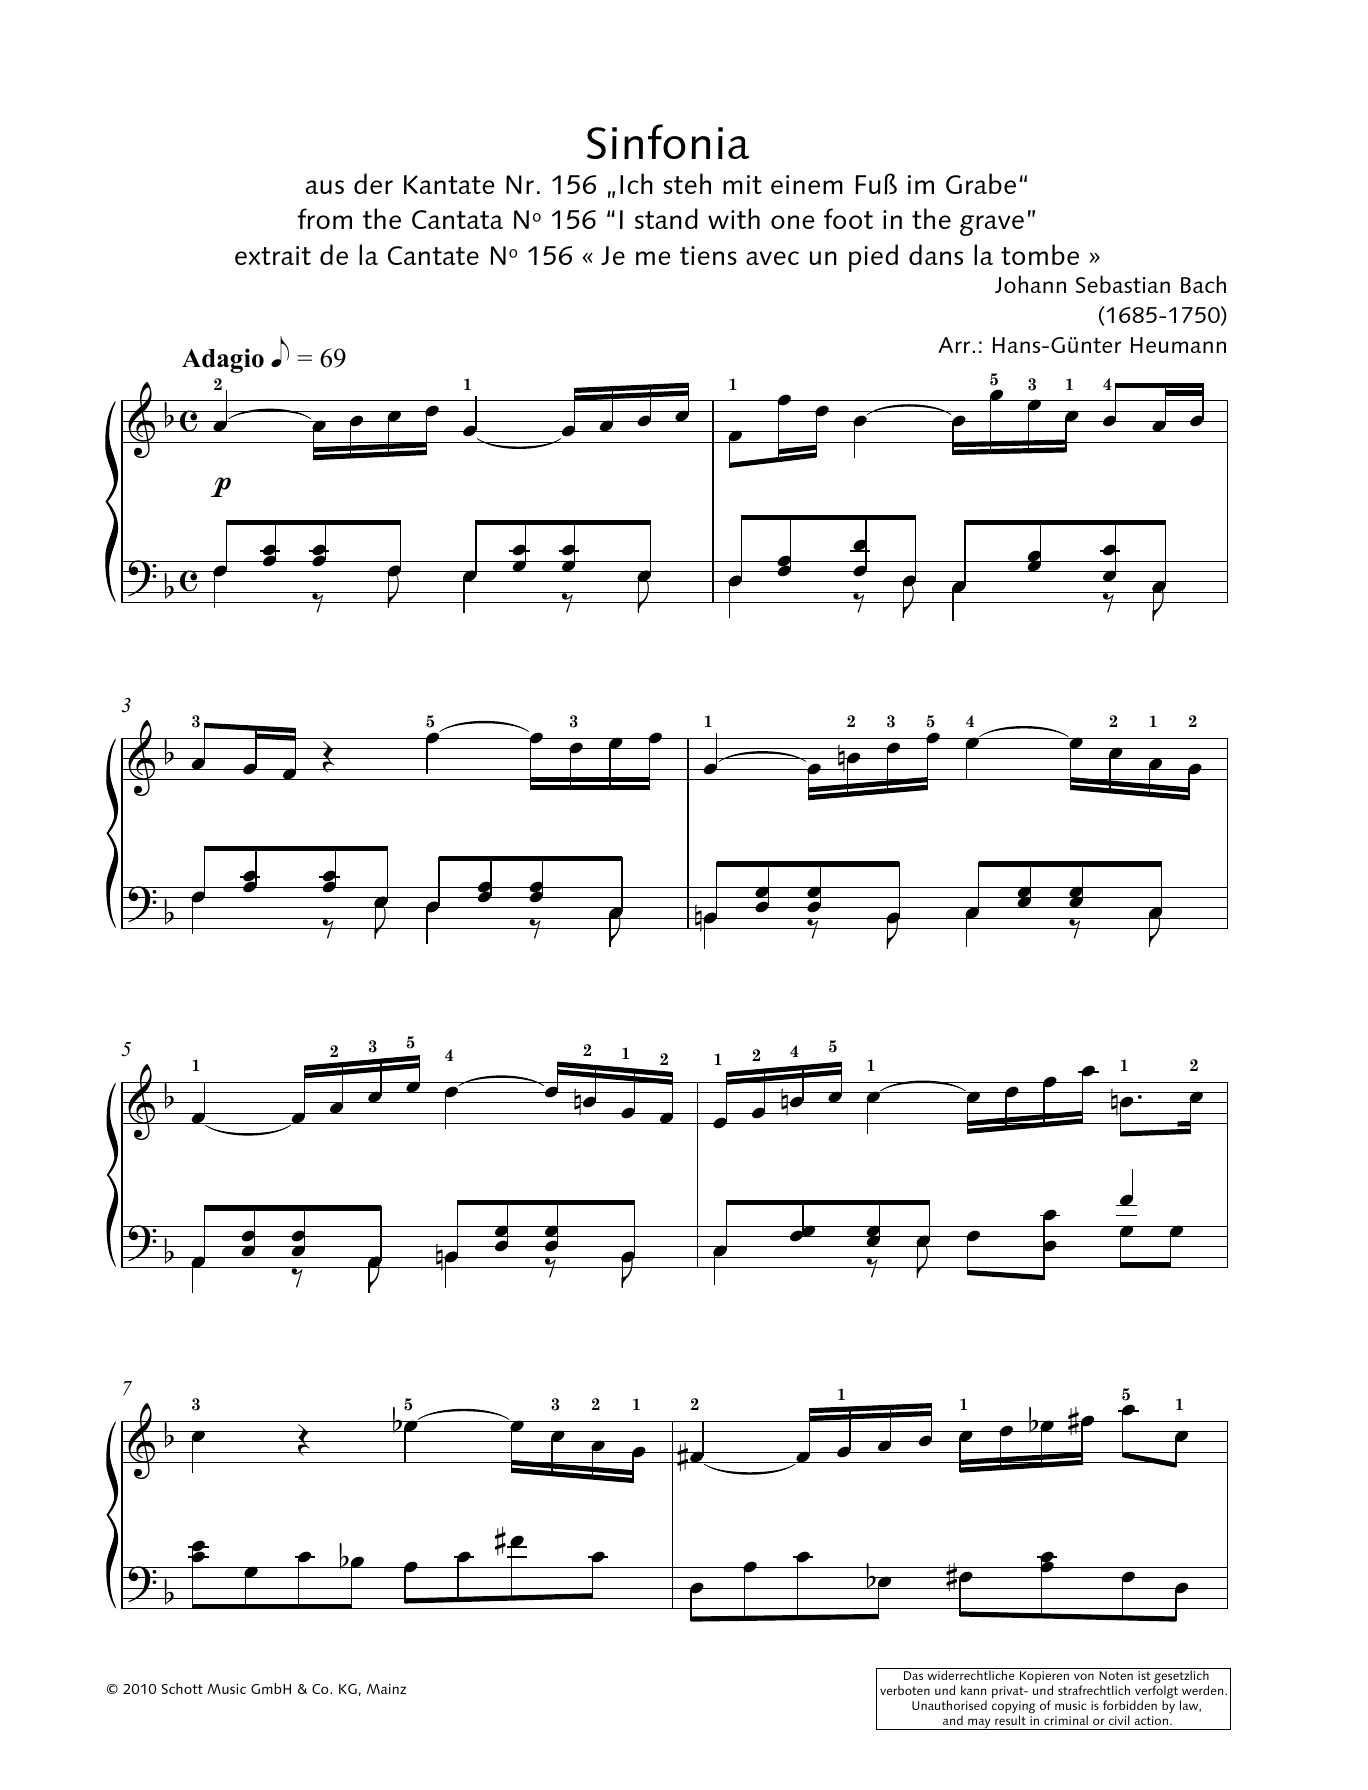 Hans-Gunter Heumann Sinfonia Sheet Music Notes & Chords for Piano Solo - Download or Print PDF